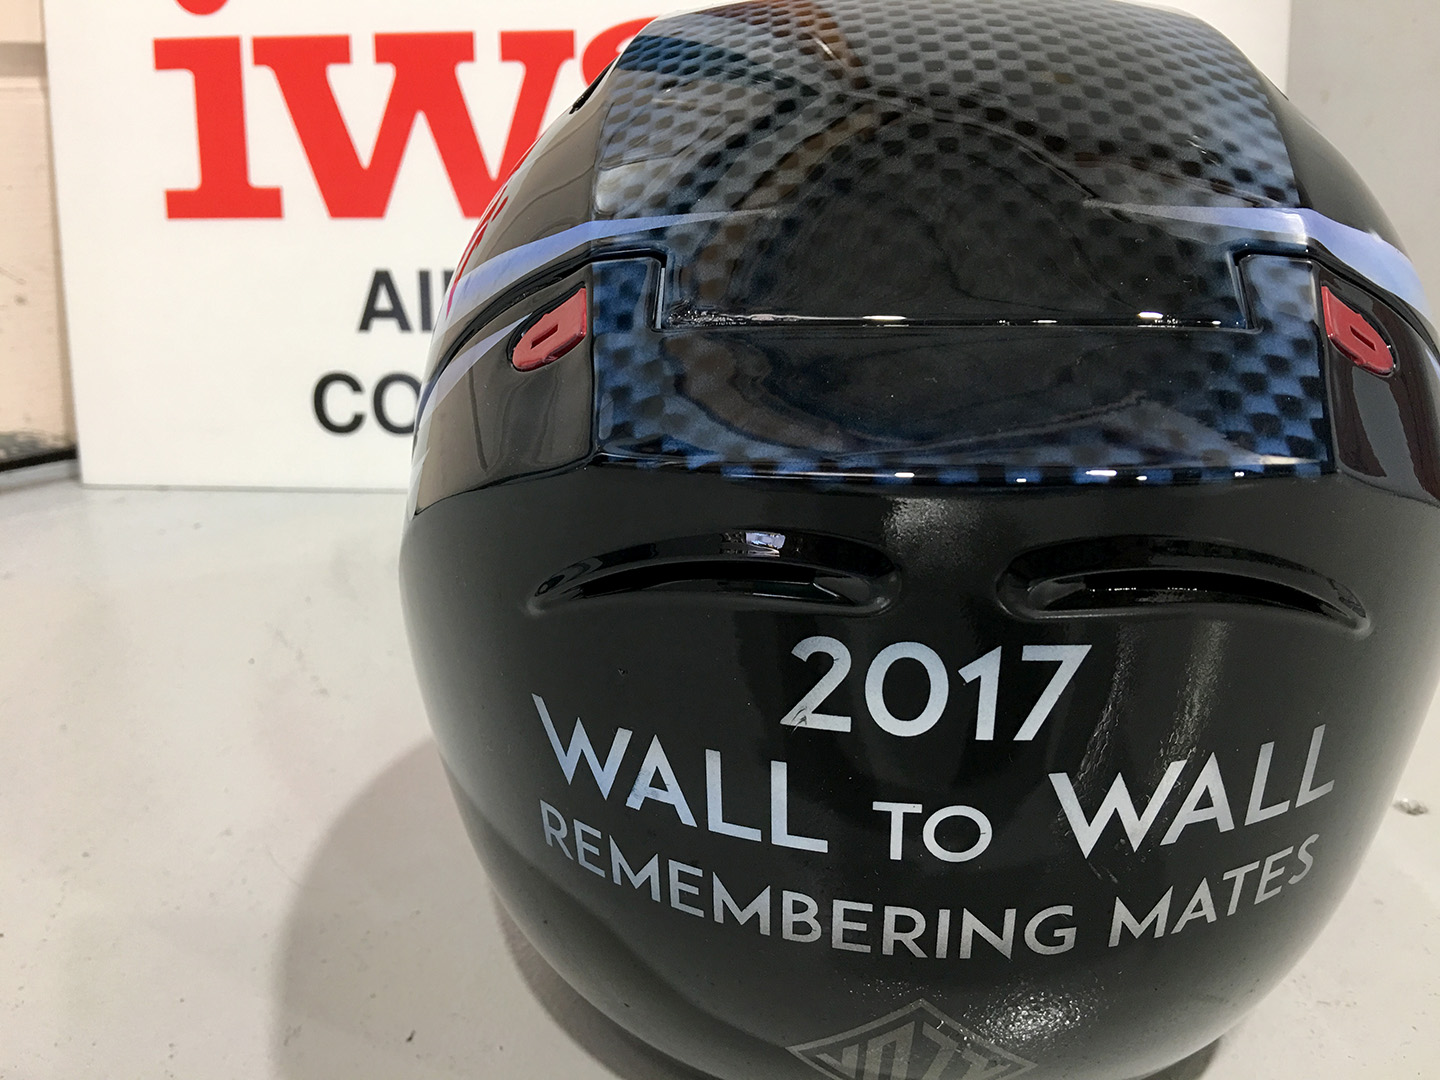 Wall to Wall sponsored Helmet